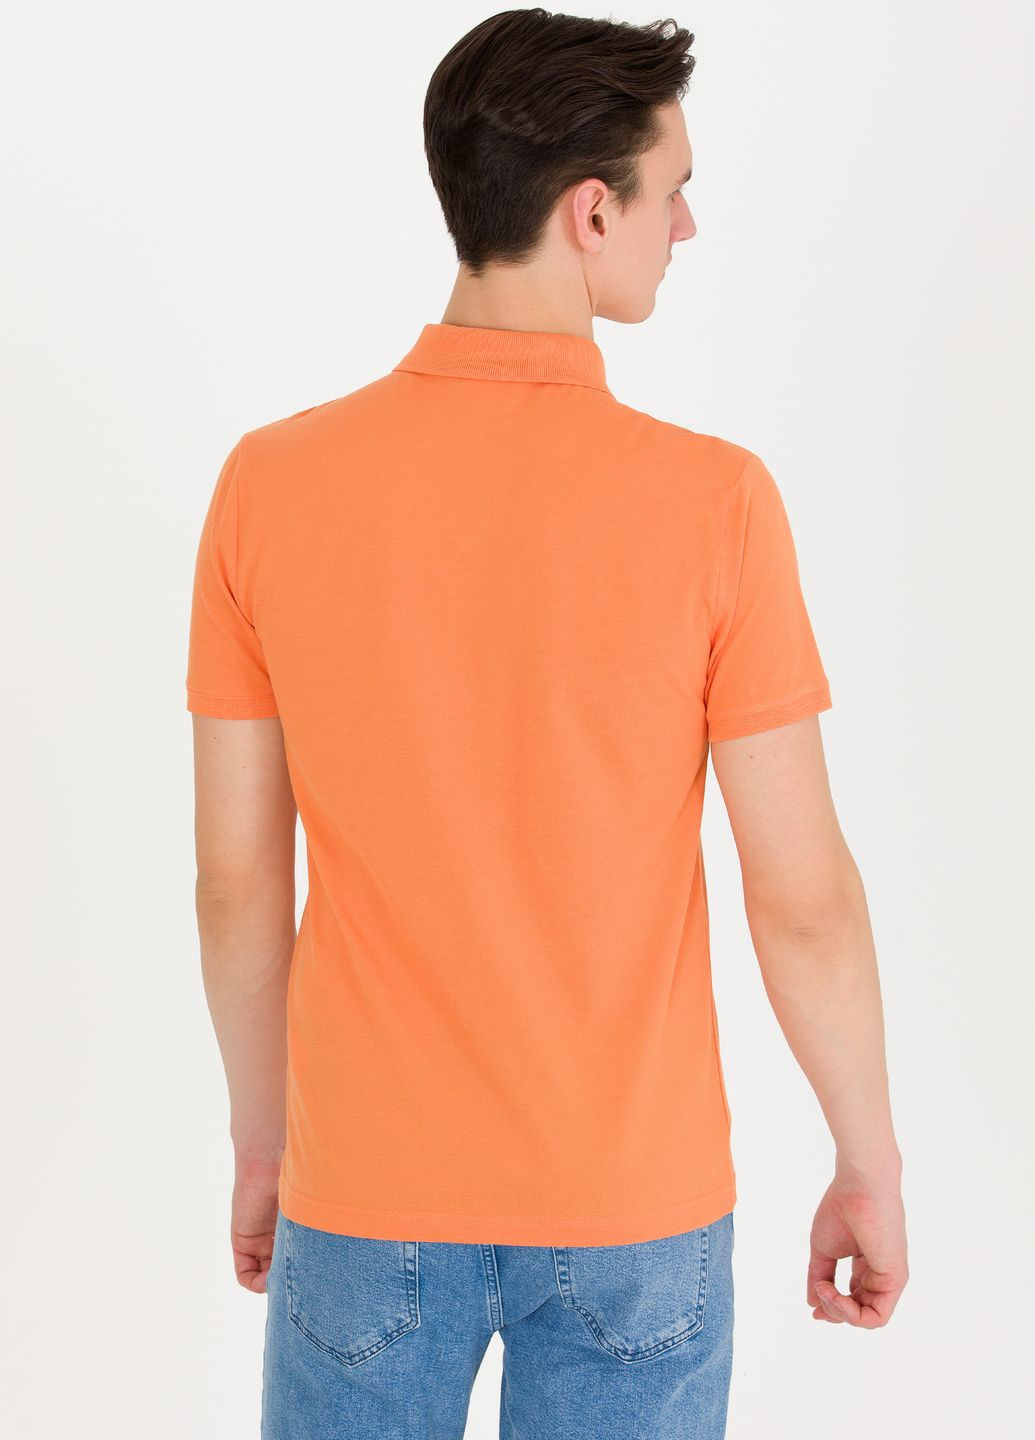 Оранжевая футболка-футболка поло мужское для мужчин U.S. Polo Assn.